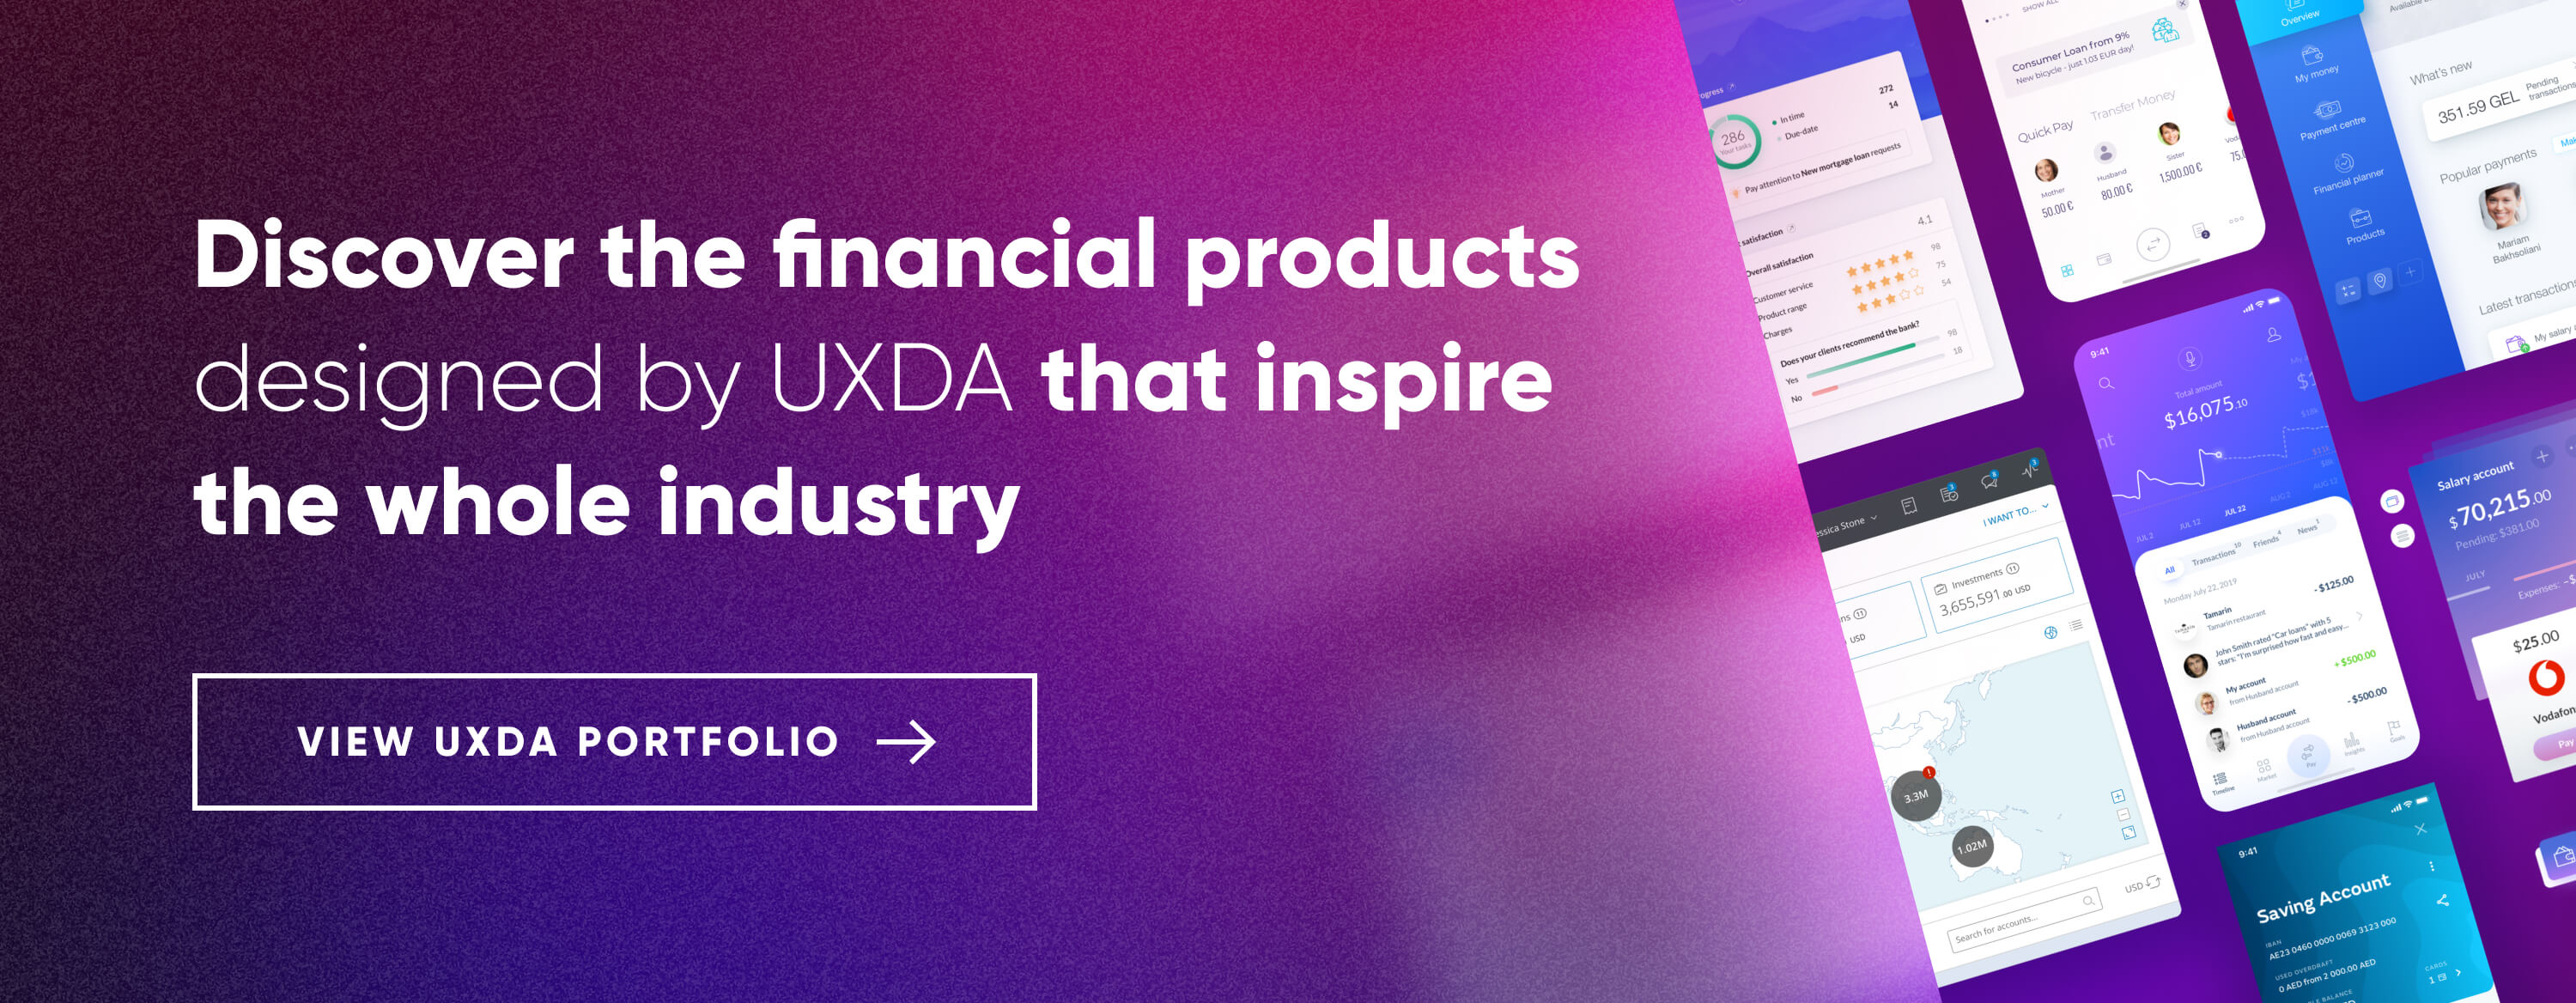 uxda-portfolio-financial-digital-product-inspire-industry-ux-1667398014.jpg